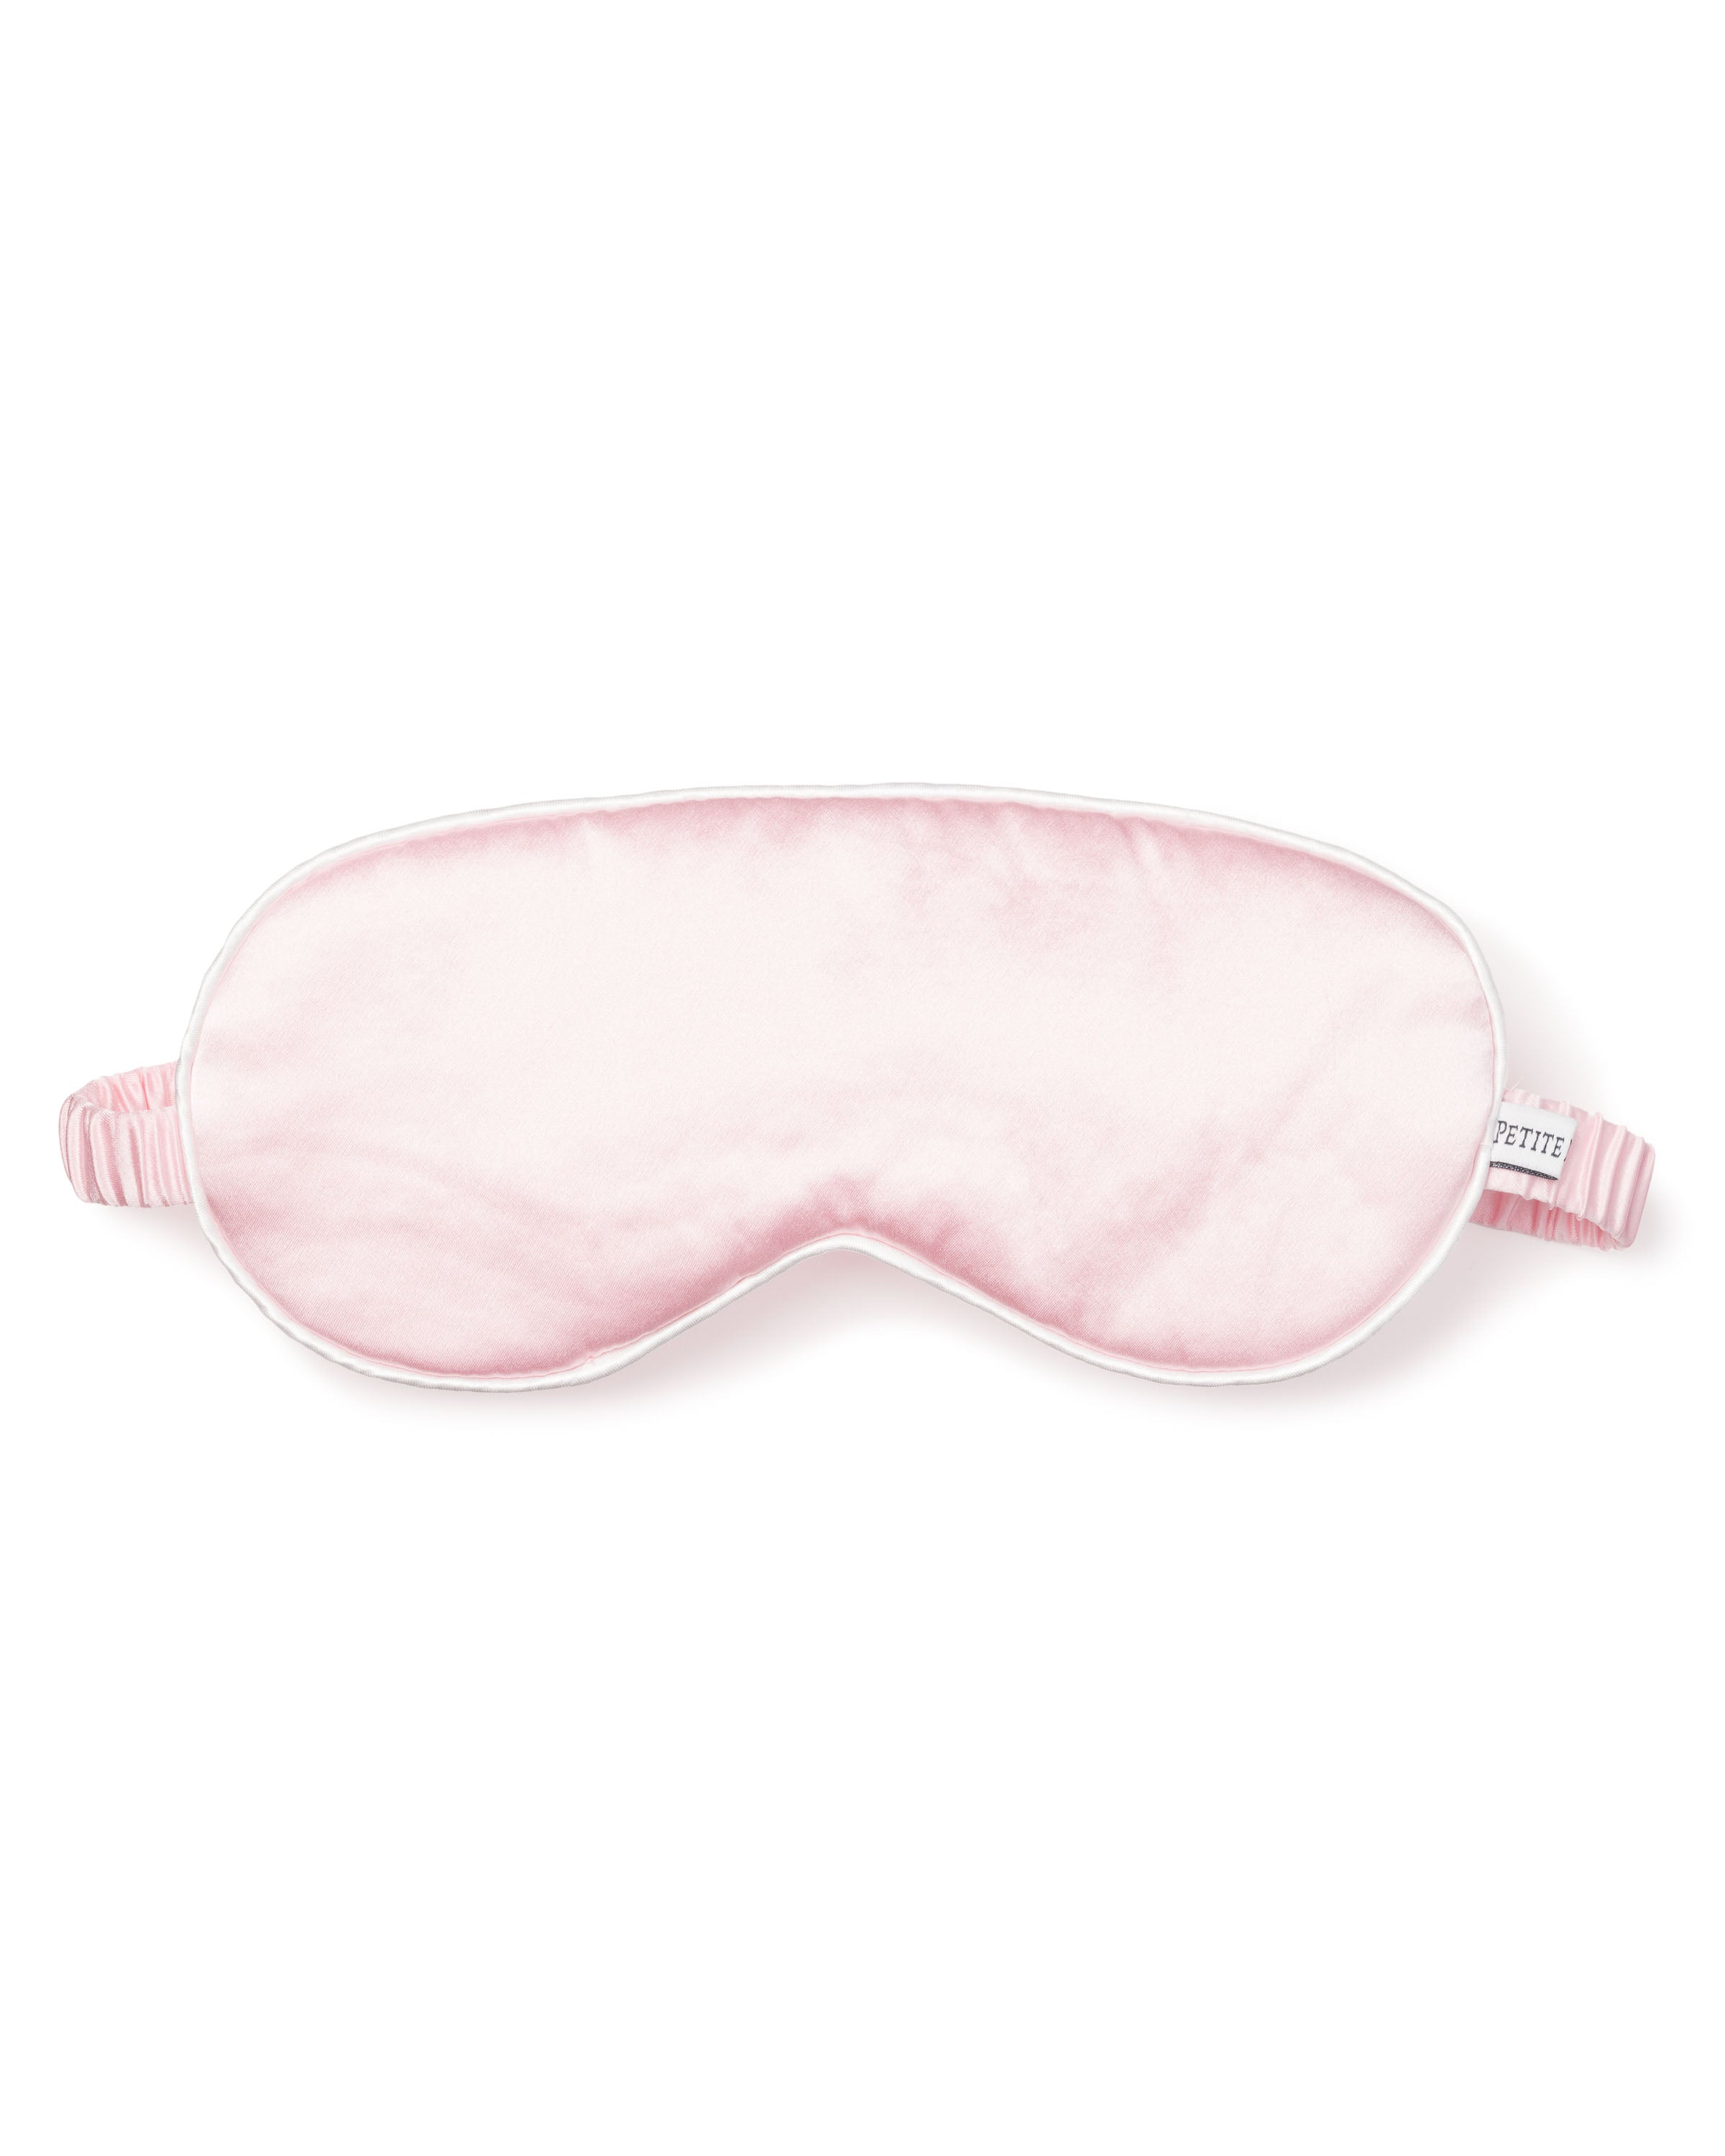 Women's Silk Sleep Mask in Pink